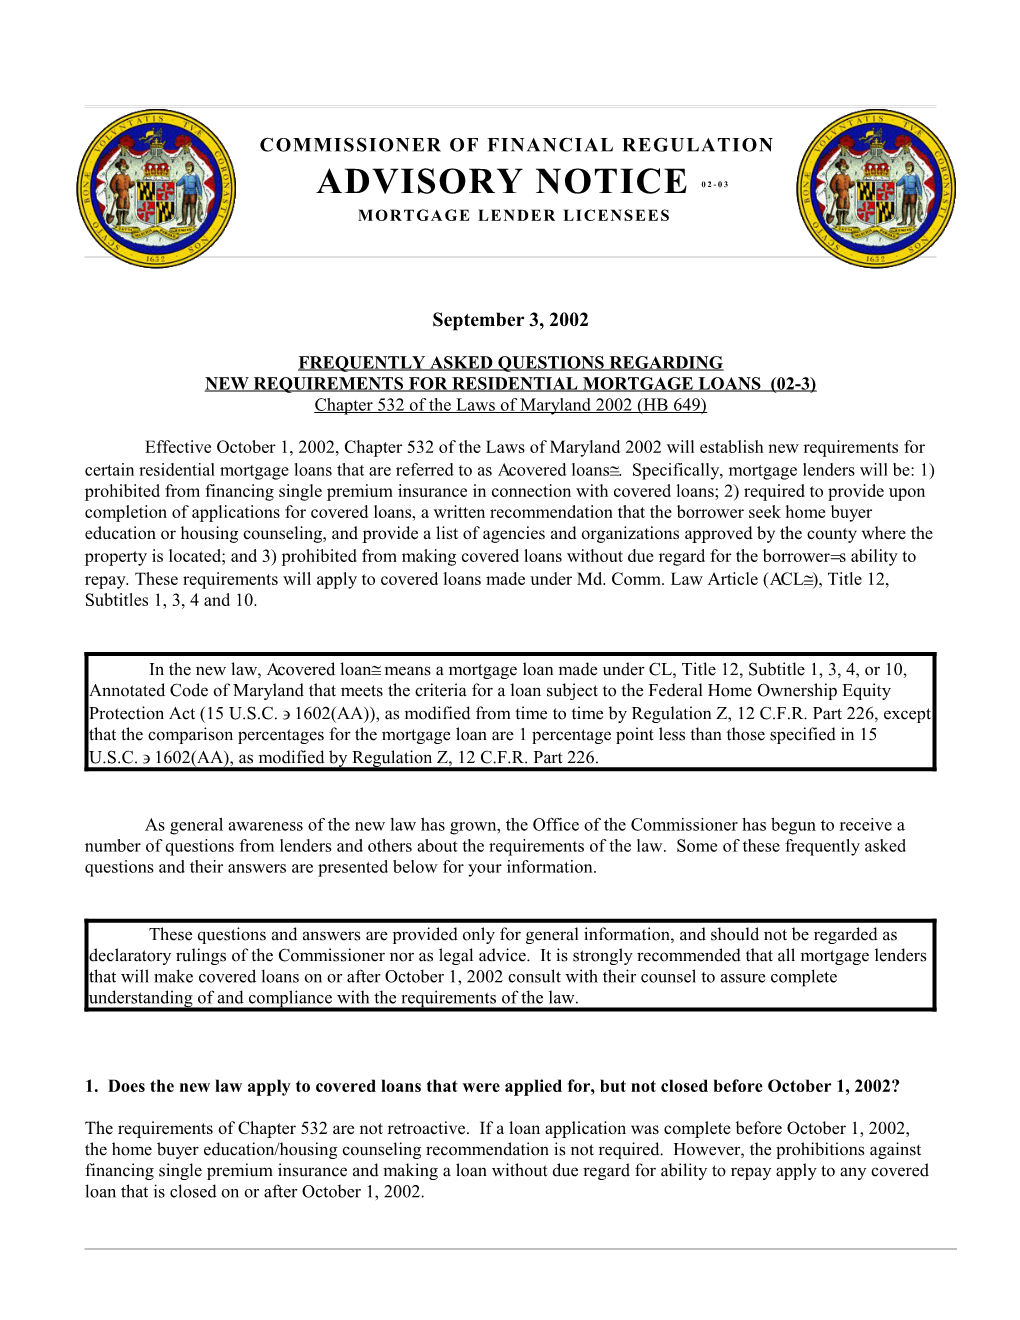 Advisory Notice 02-03